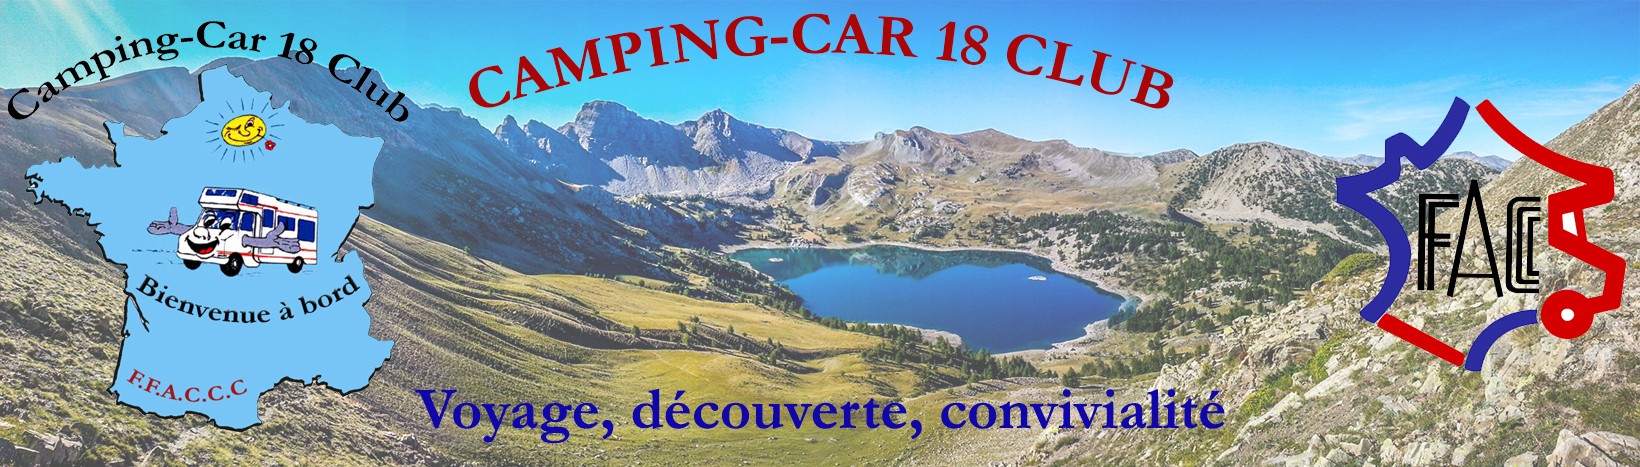 Camping-car 18 Club